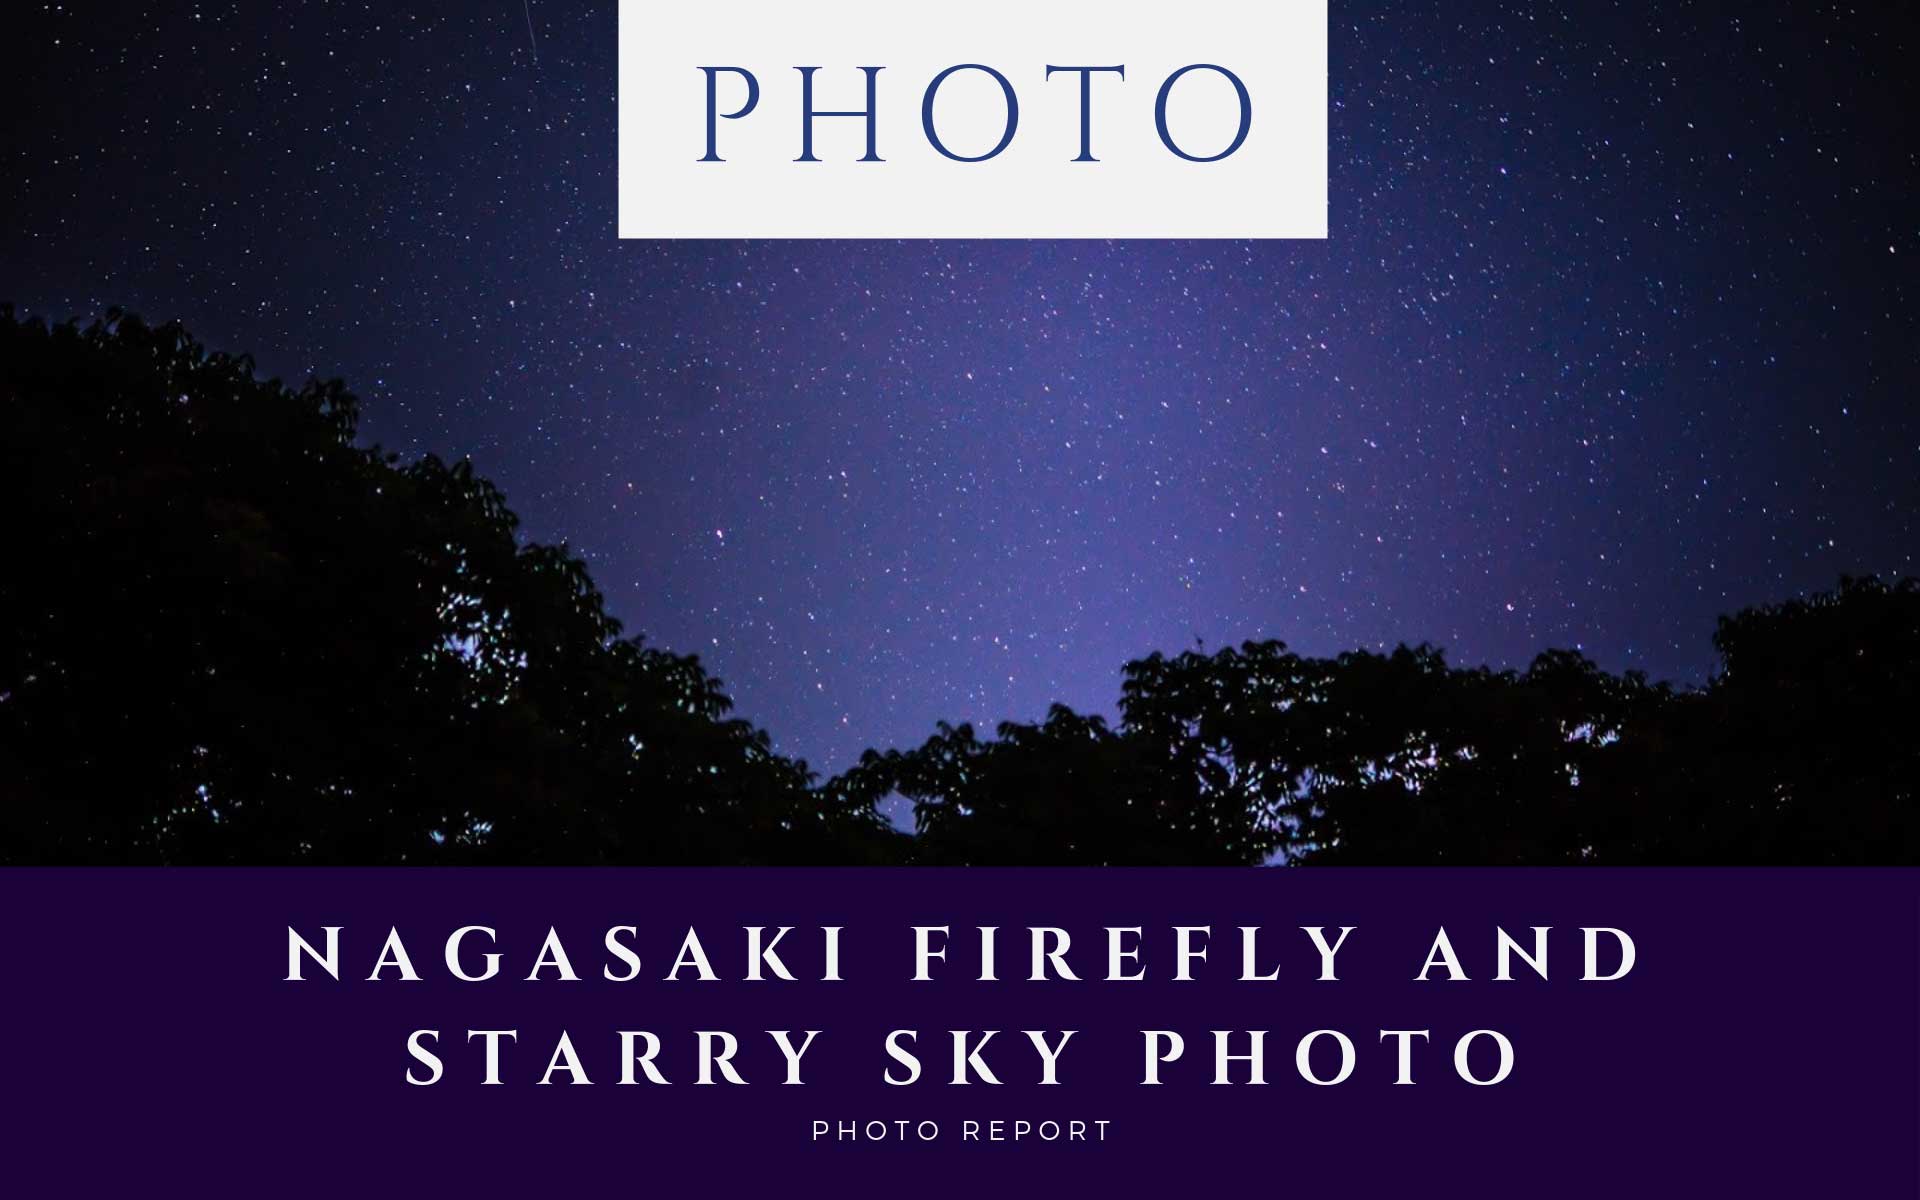 Nagasaki-firefly-and-starry-sky-photo